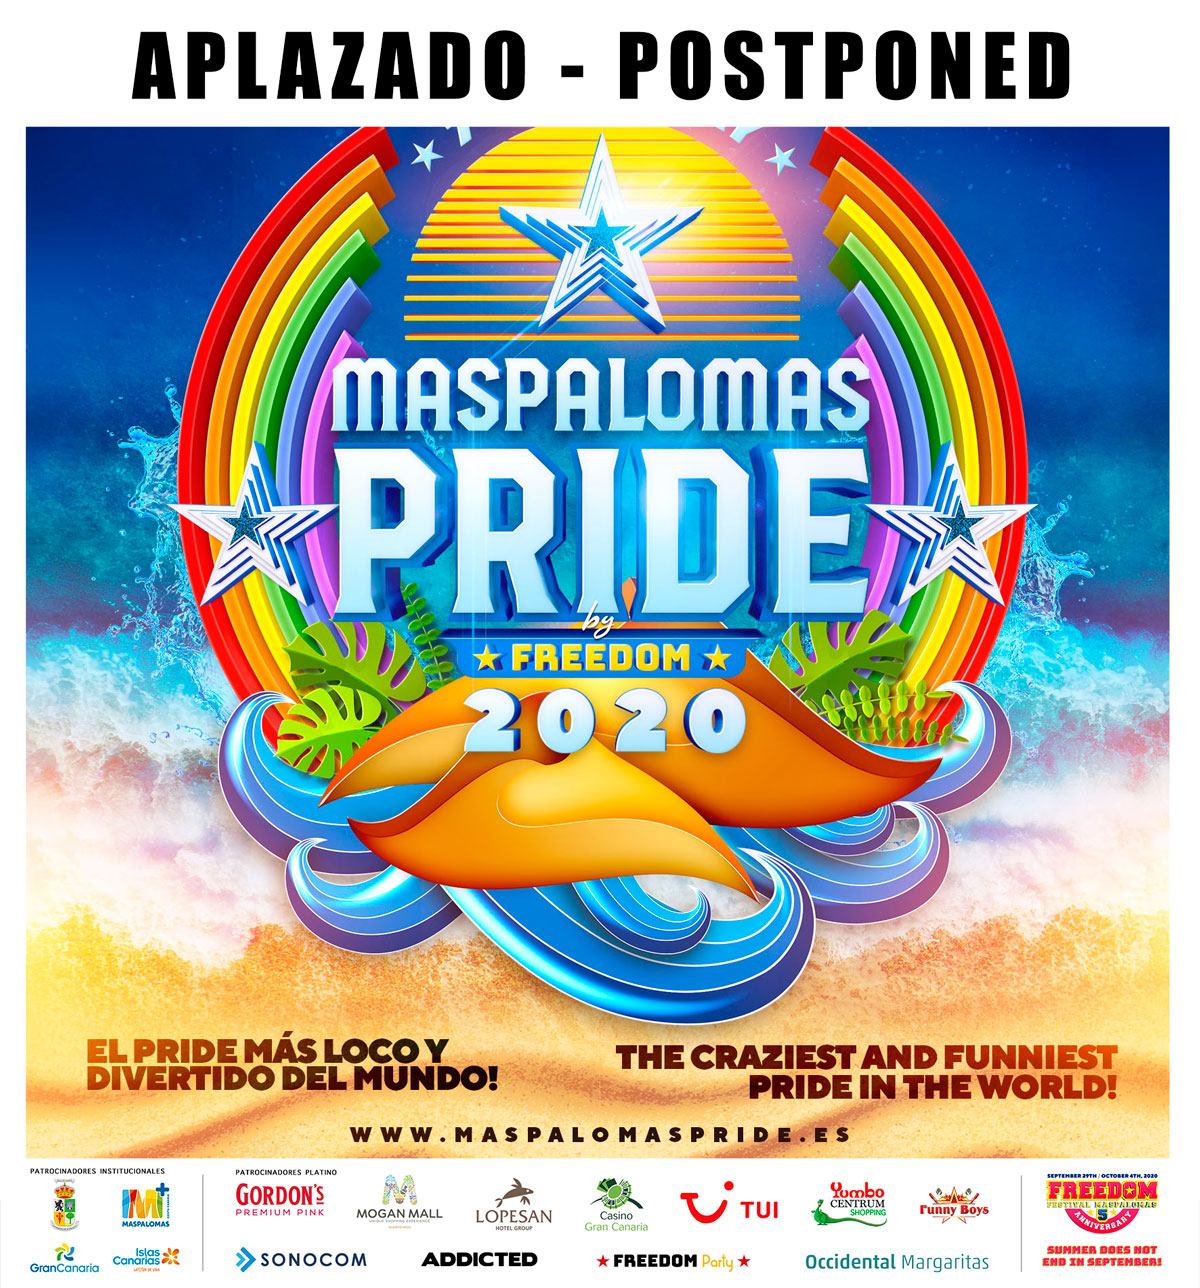 Neuer Gaypride-Termin in Maspalomas nicht genehmigt